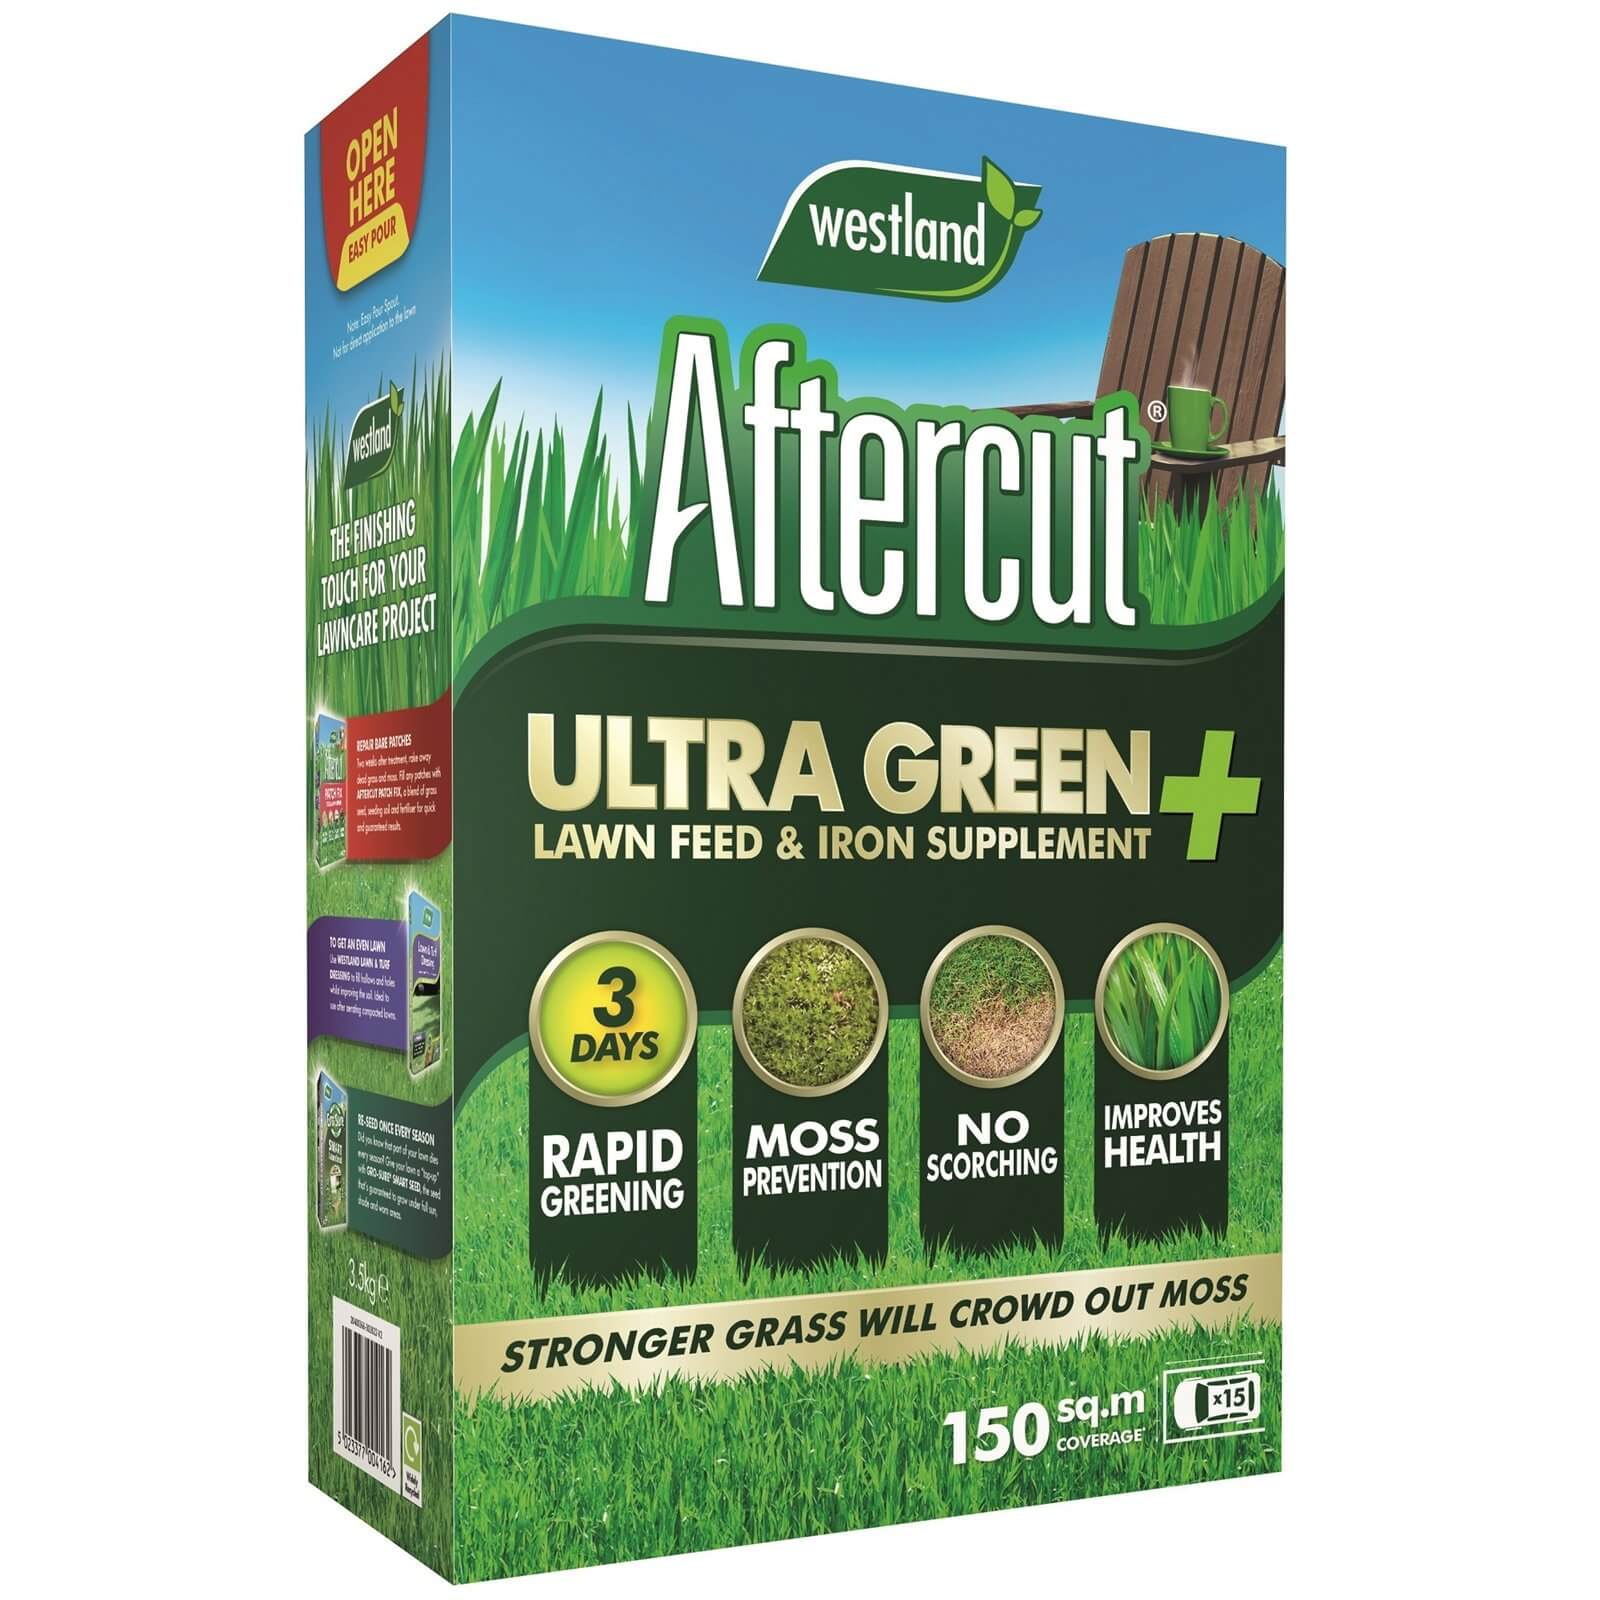 Aftercut Ultra Green + Lawn Feed & Iron Supplement - 150m²